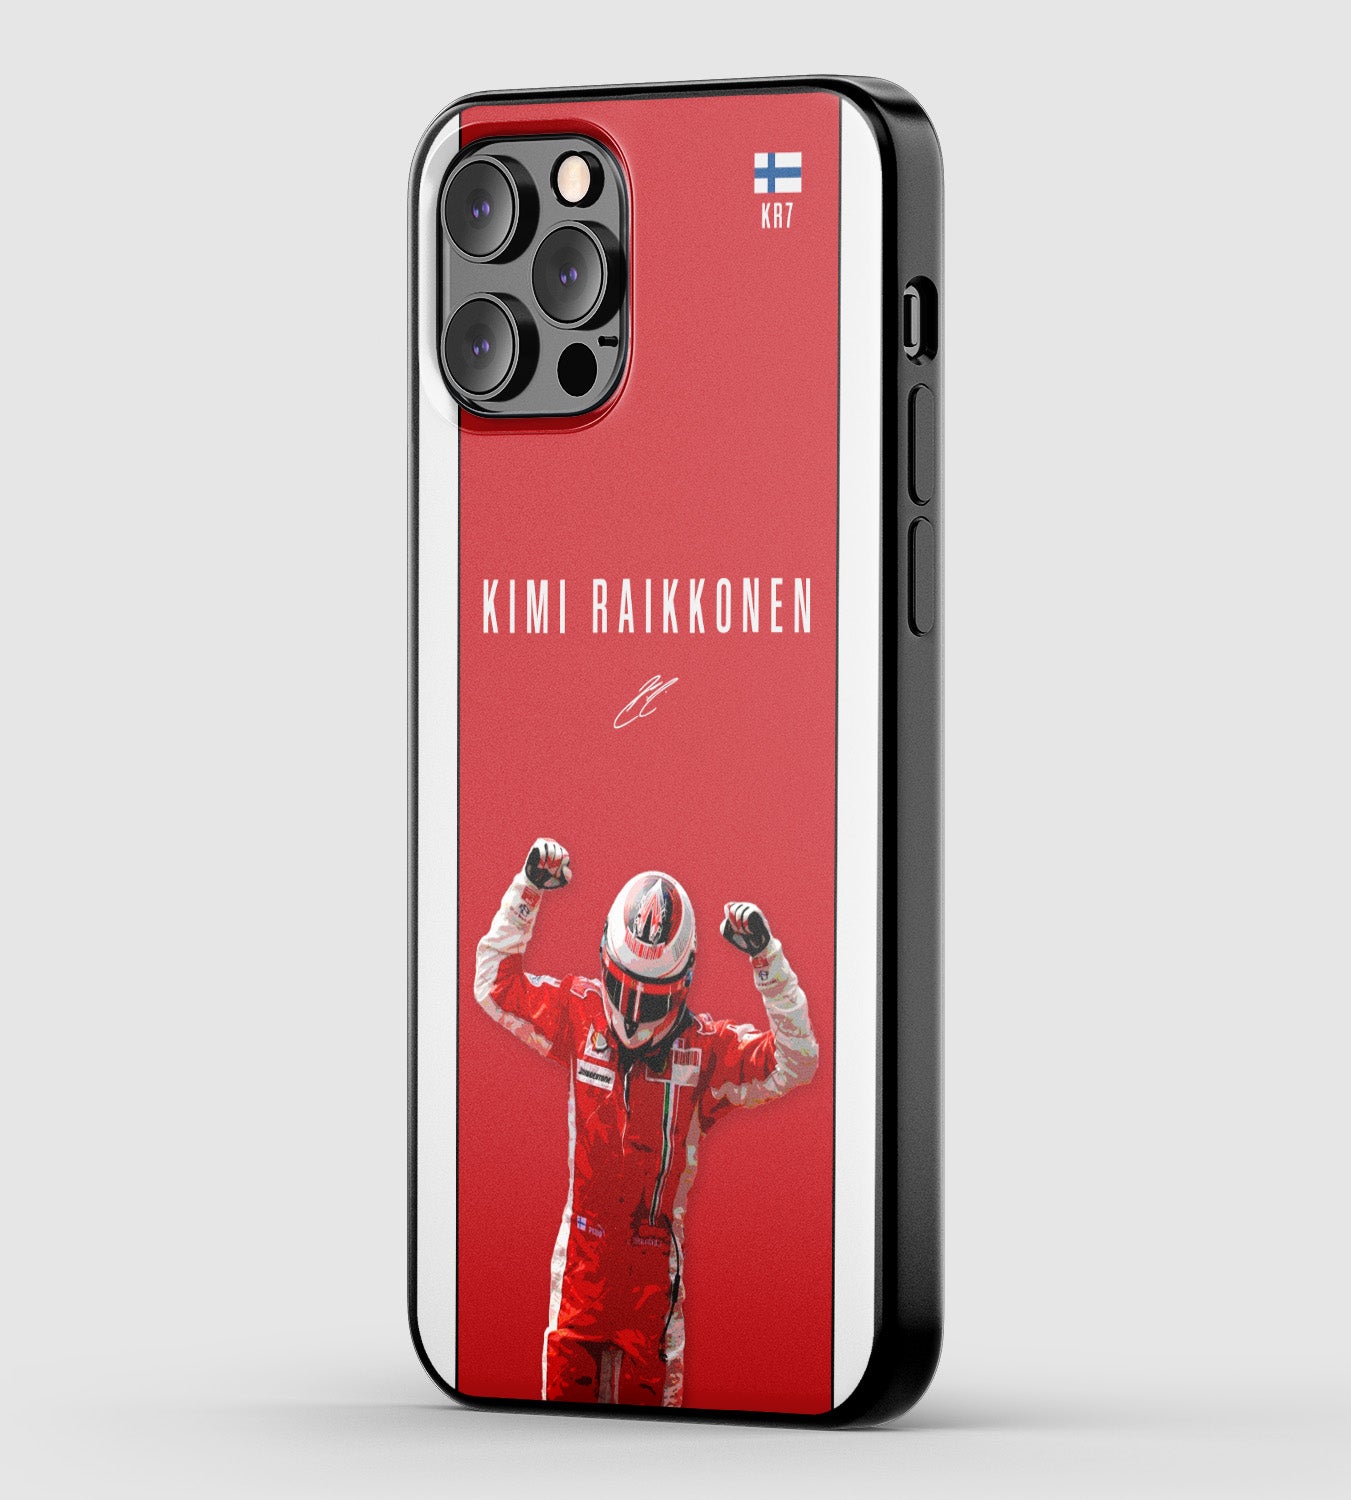 Iconic Formula 1 Ferrari driver Kimi Raikkonen phone case